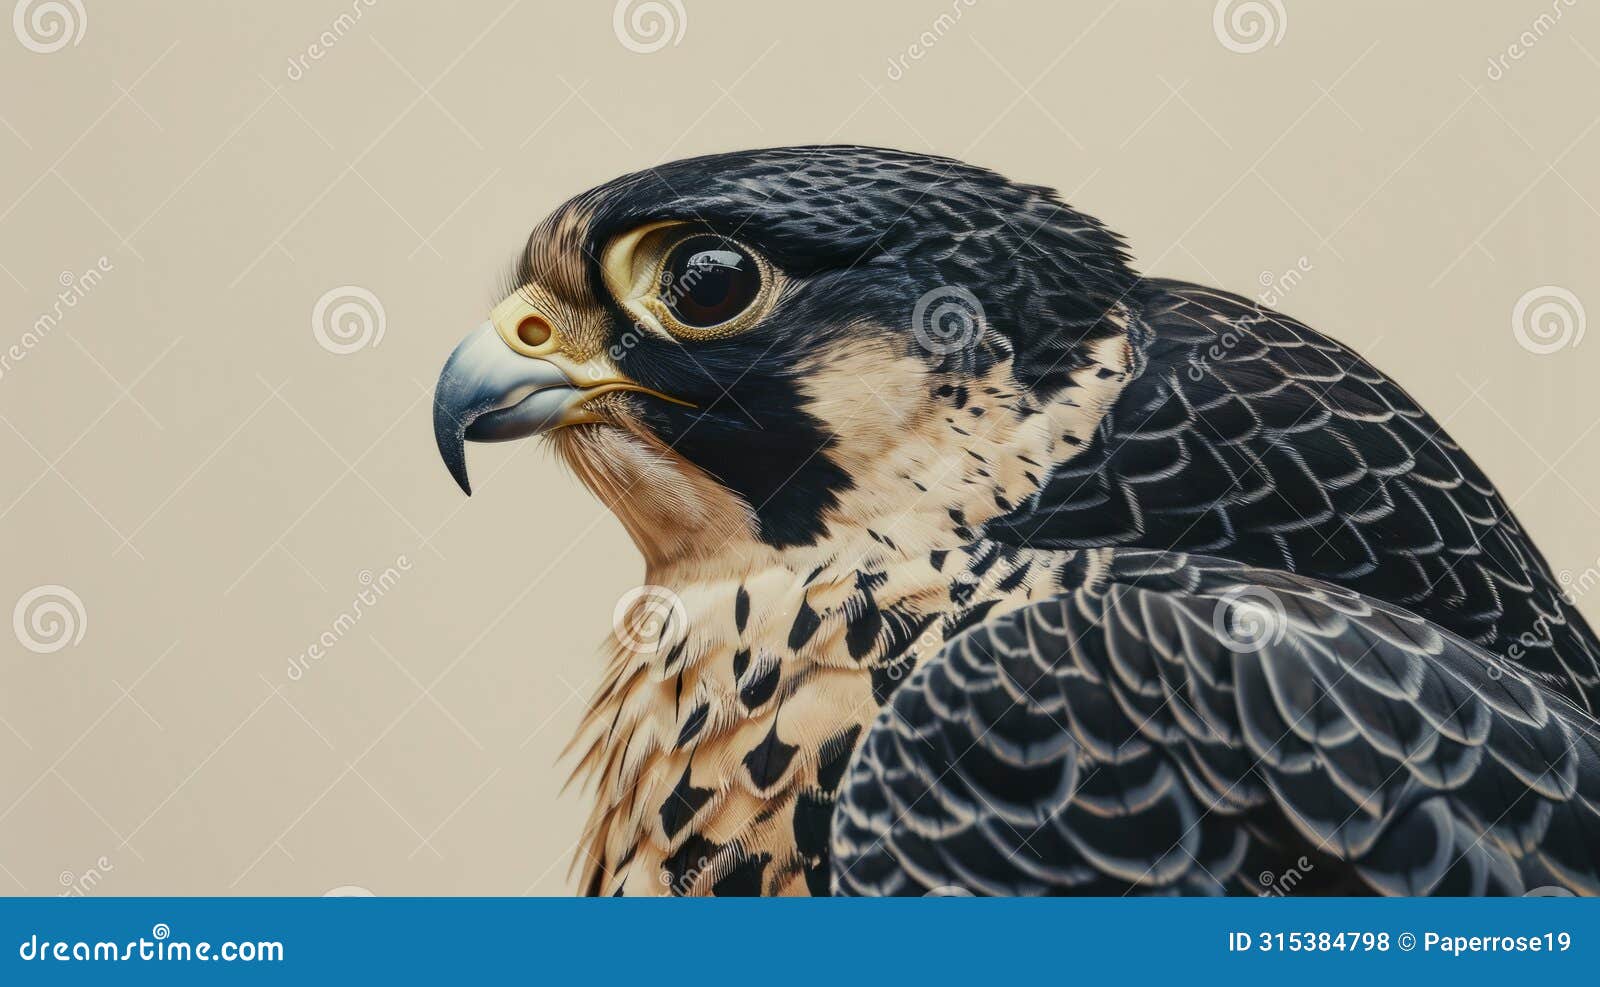 closeup photorealistic nikon photo of an australian peregrine falcon